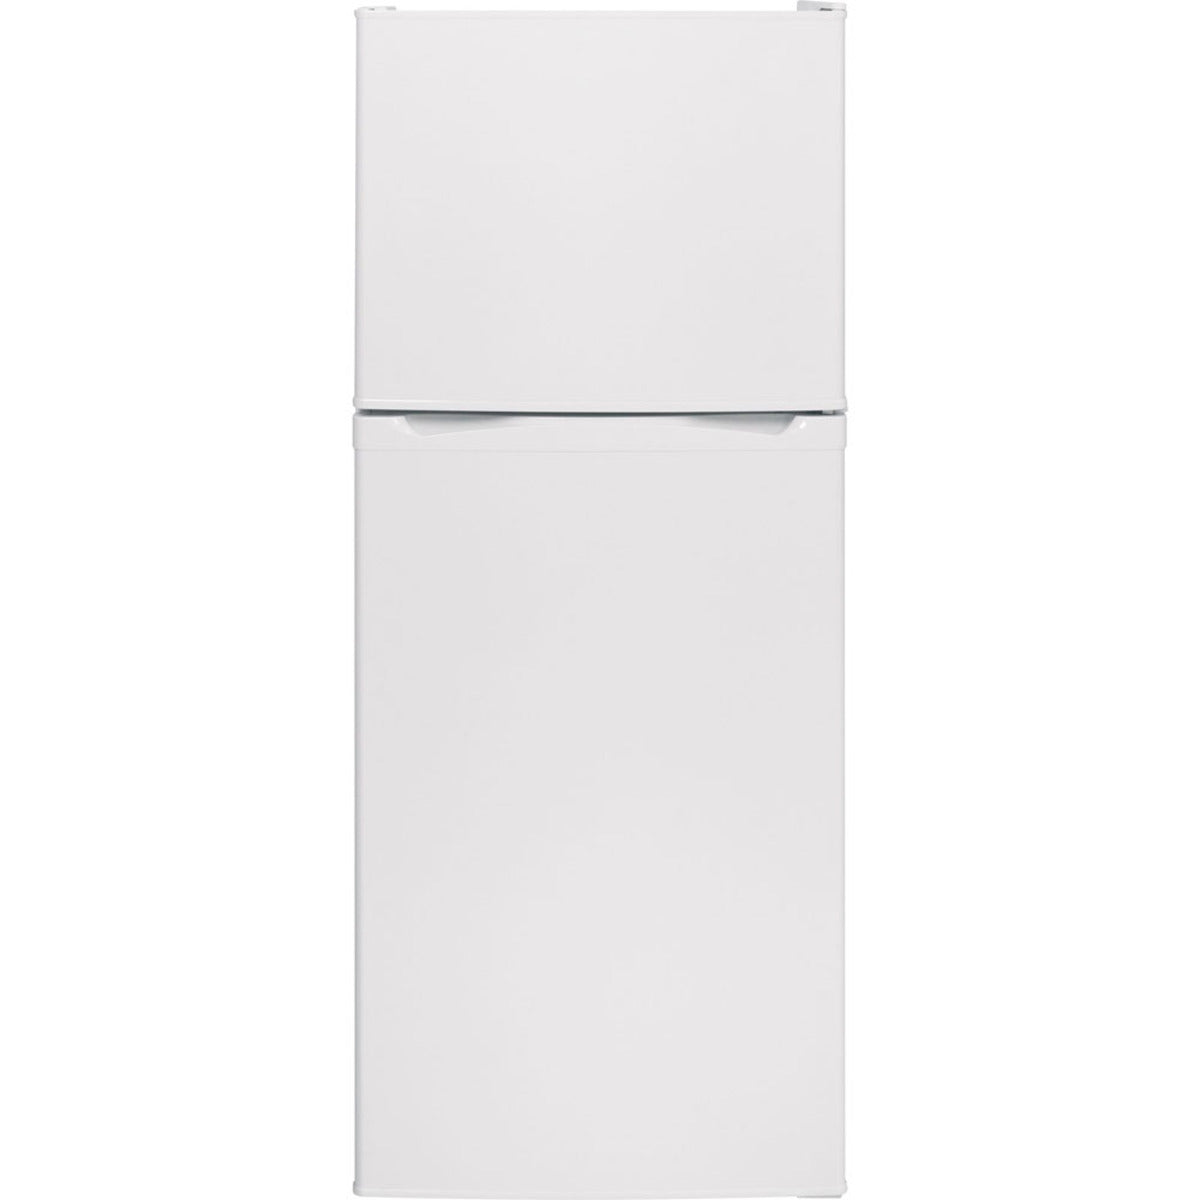 Moffat - 24.02 Inch 11.55 cu. ft Top Mount Refrigerator in White - MPE12FGKLWW